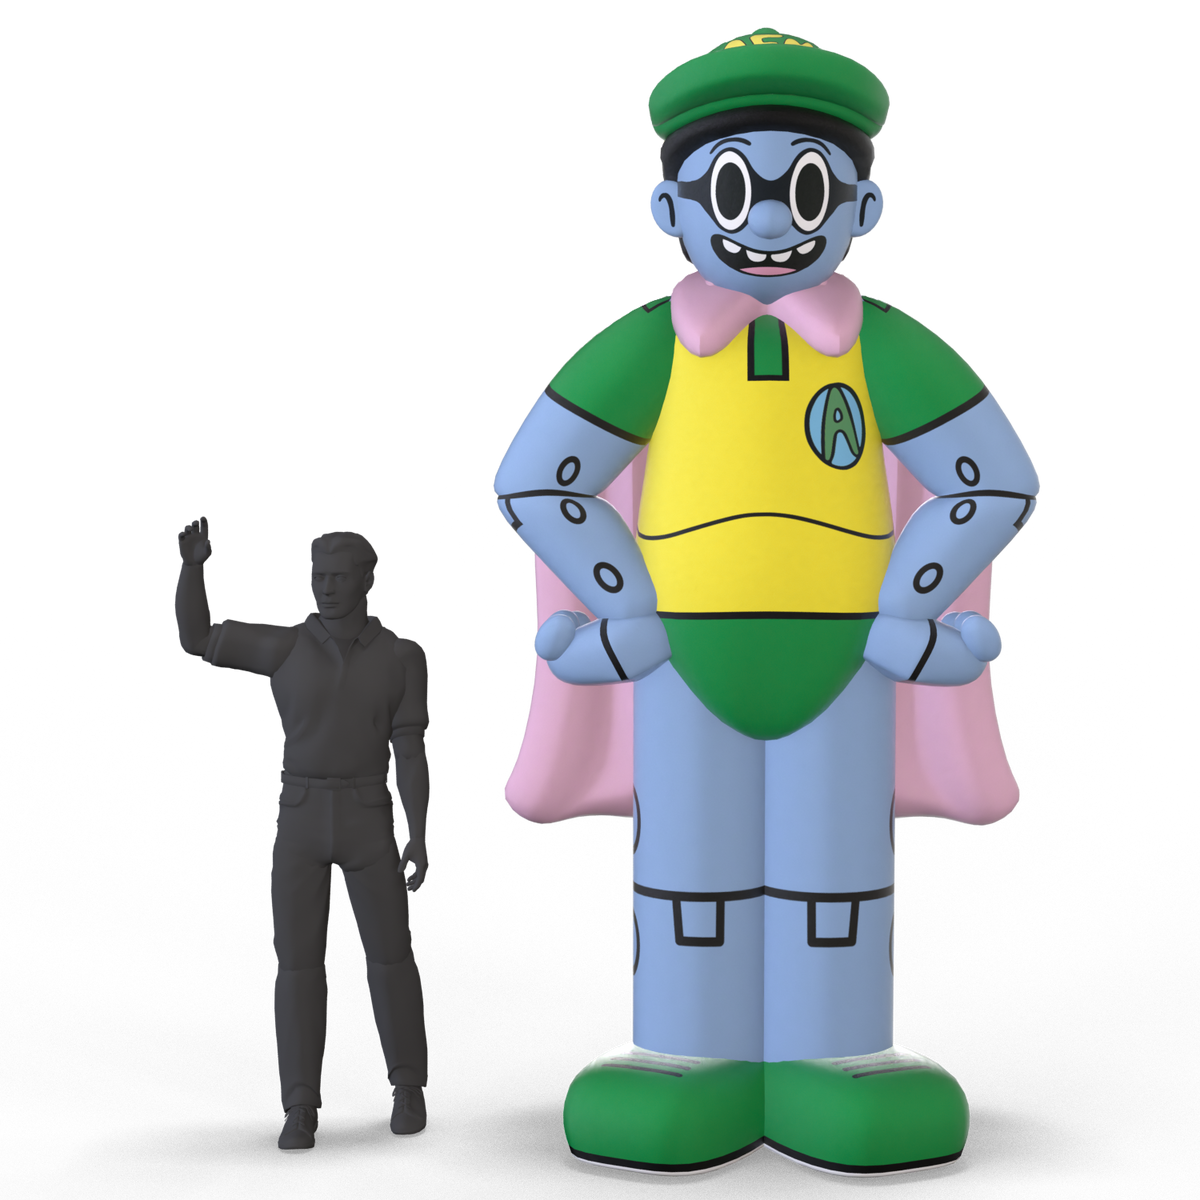 Giant Inflatable MegaHeads™ Humanoid Character